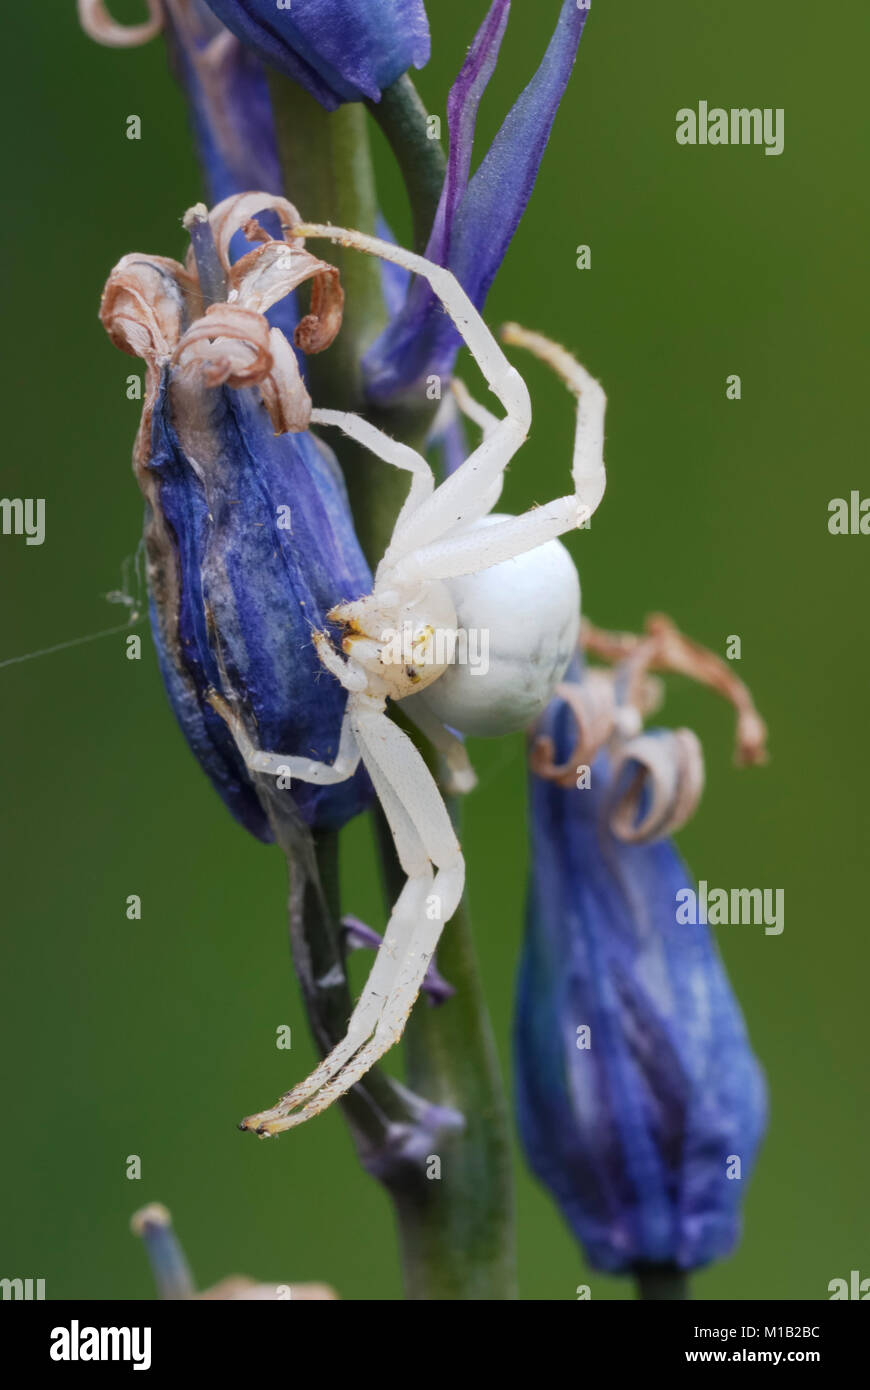 White Crab Spider, Misumena vatia on withered Bluebell flowers, Wales, UK Stock Photo